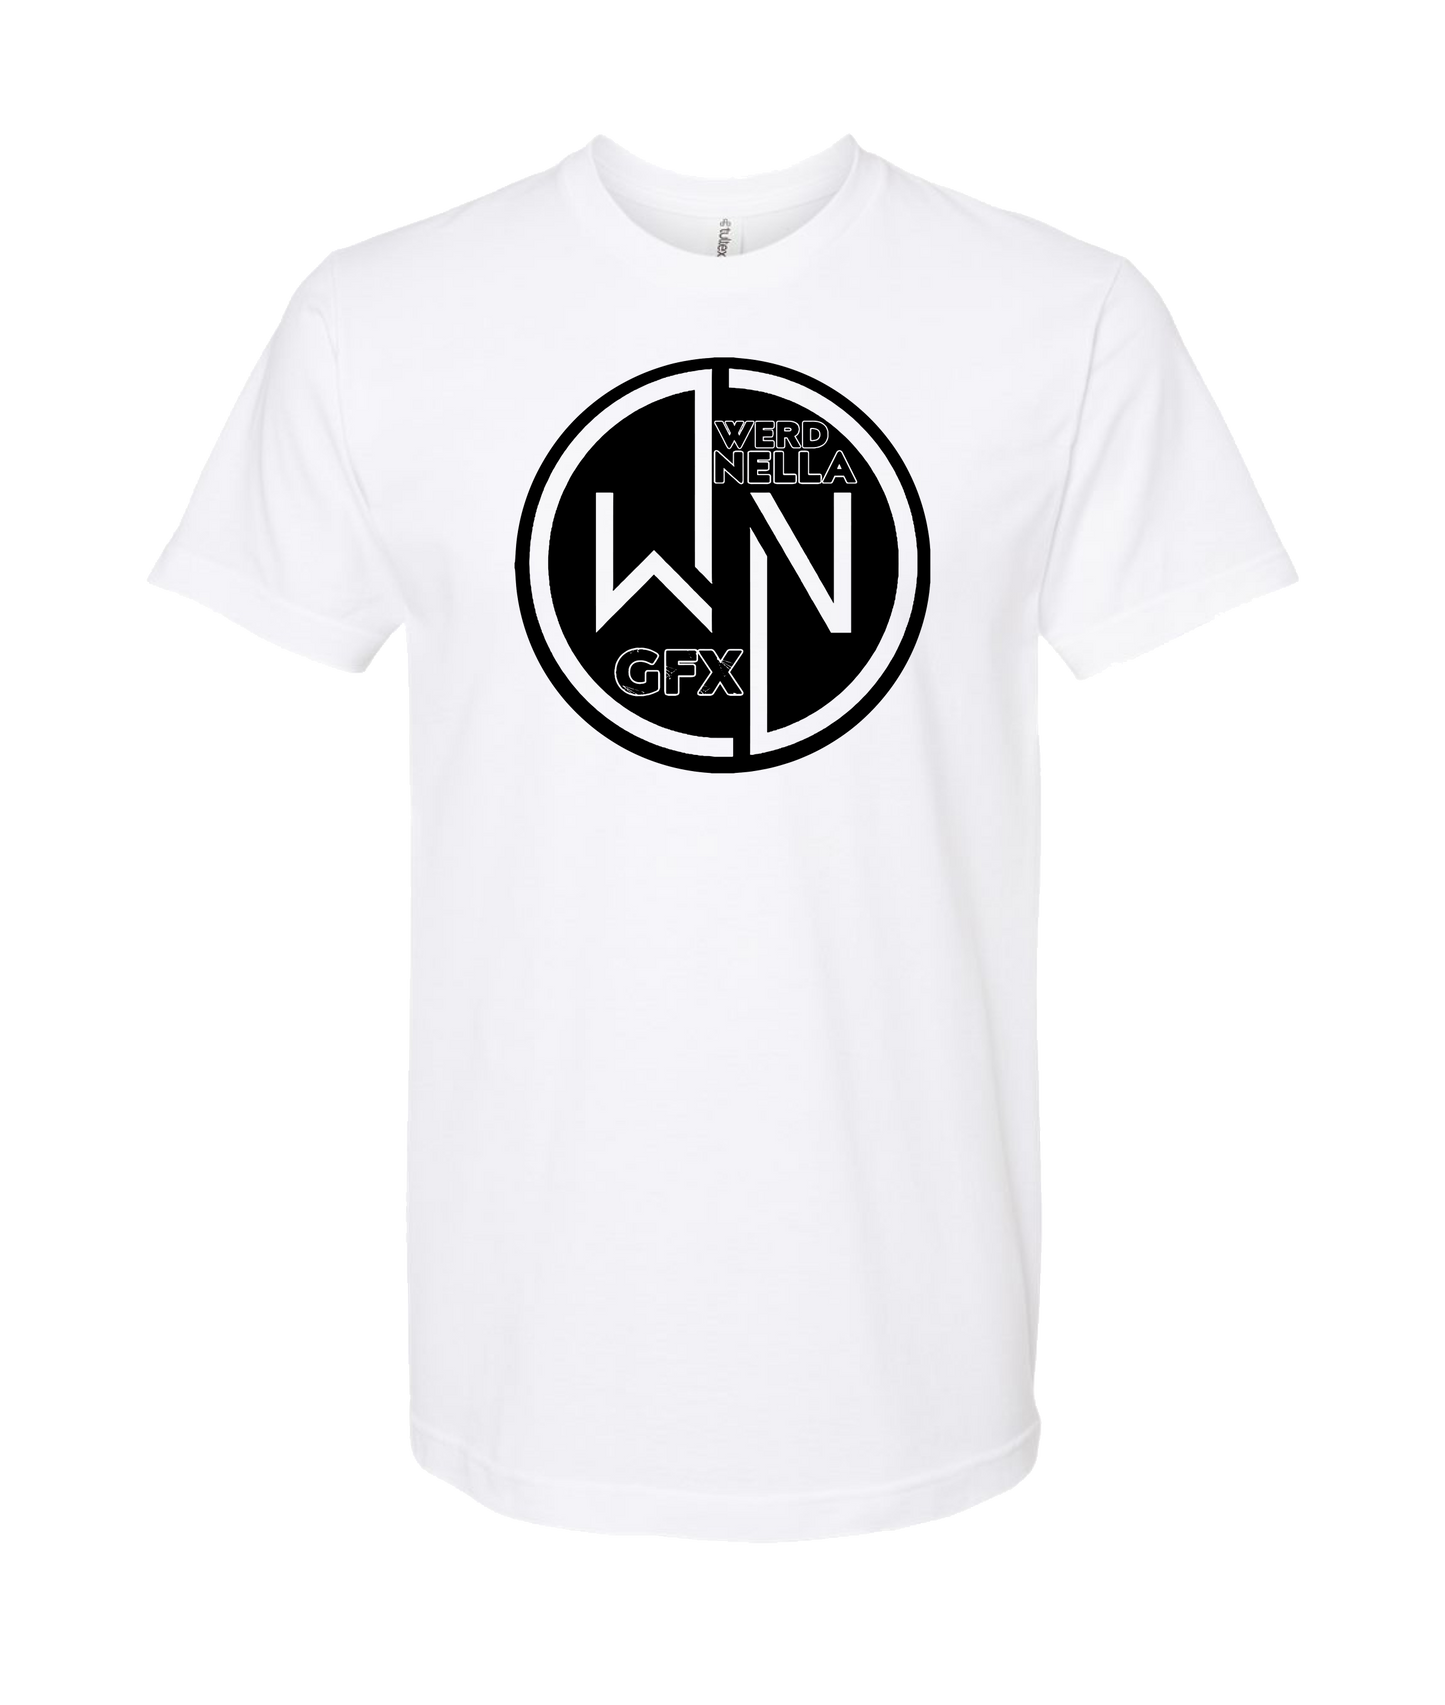 Werd Nella Graphics - WN GFX - White T-Shirt